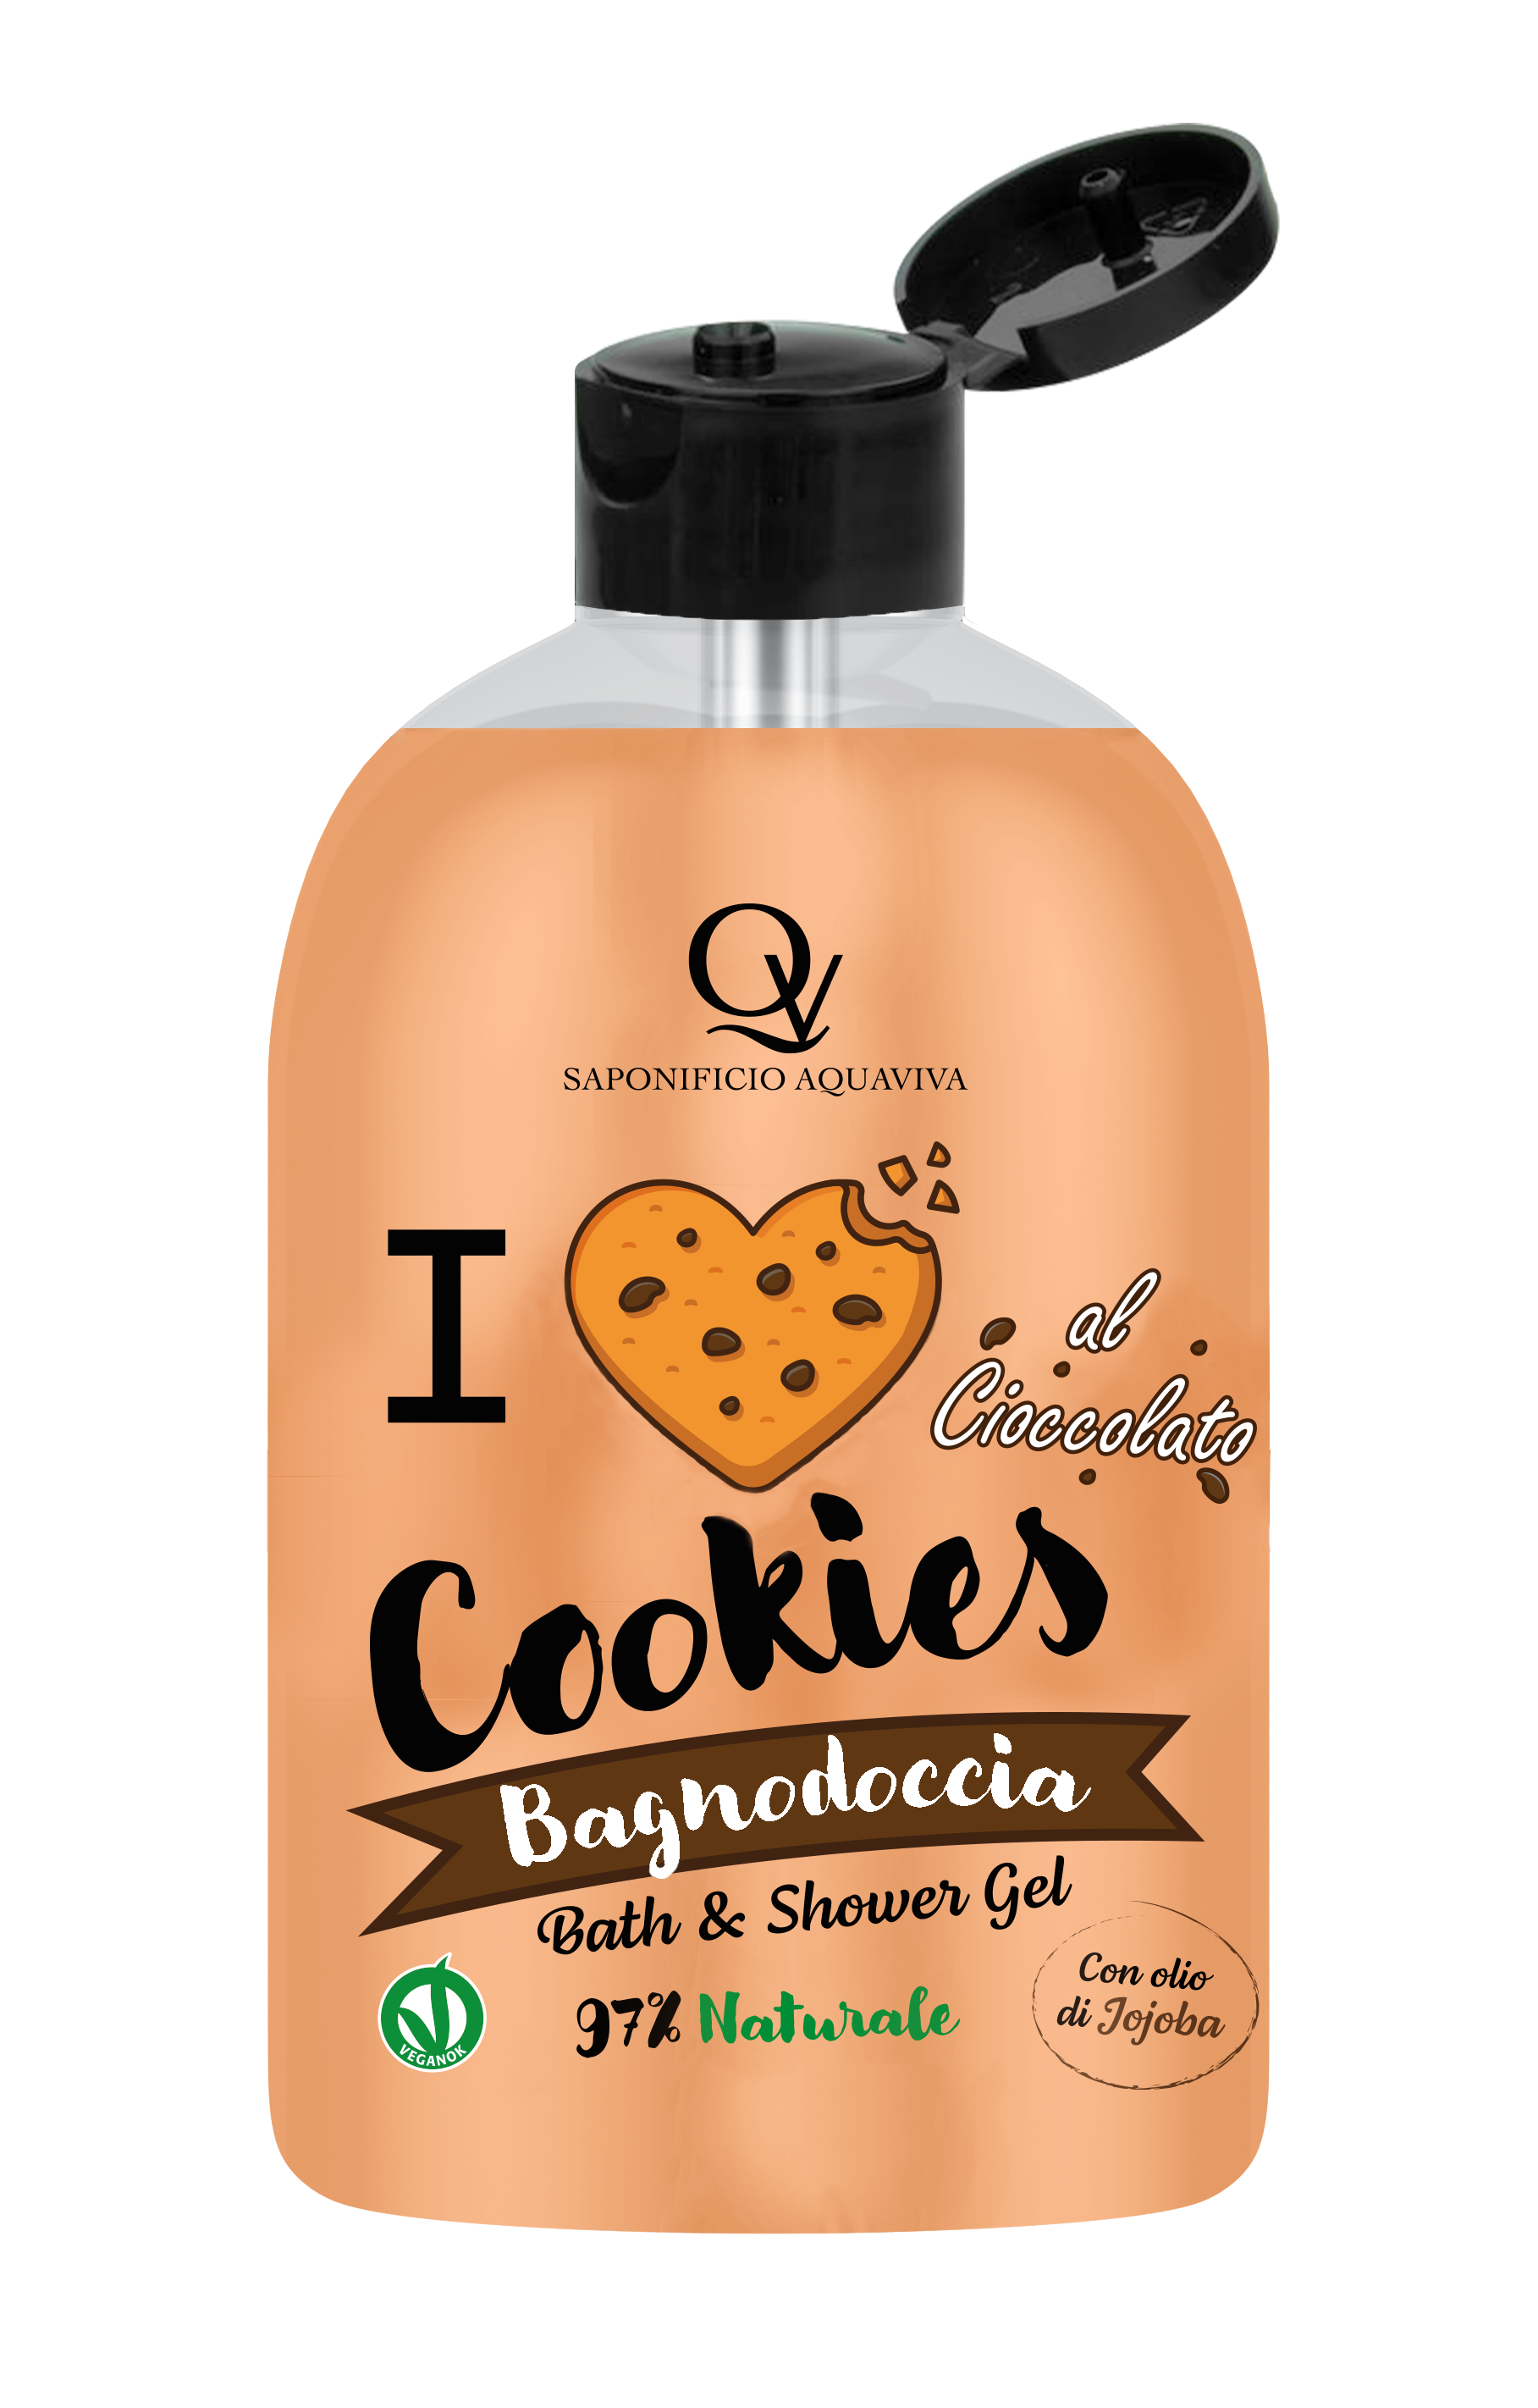 Bagnodoccia: Cookies al Cioccolato 100% Vegan Saponificio Aquaviva